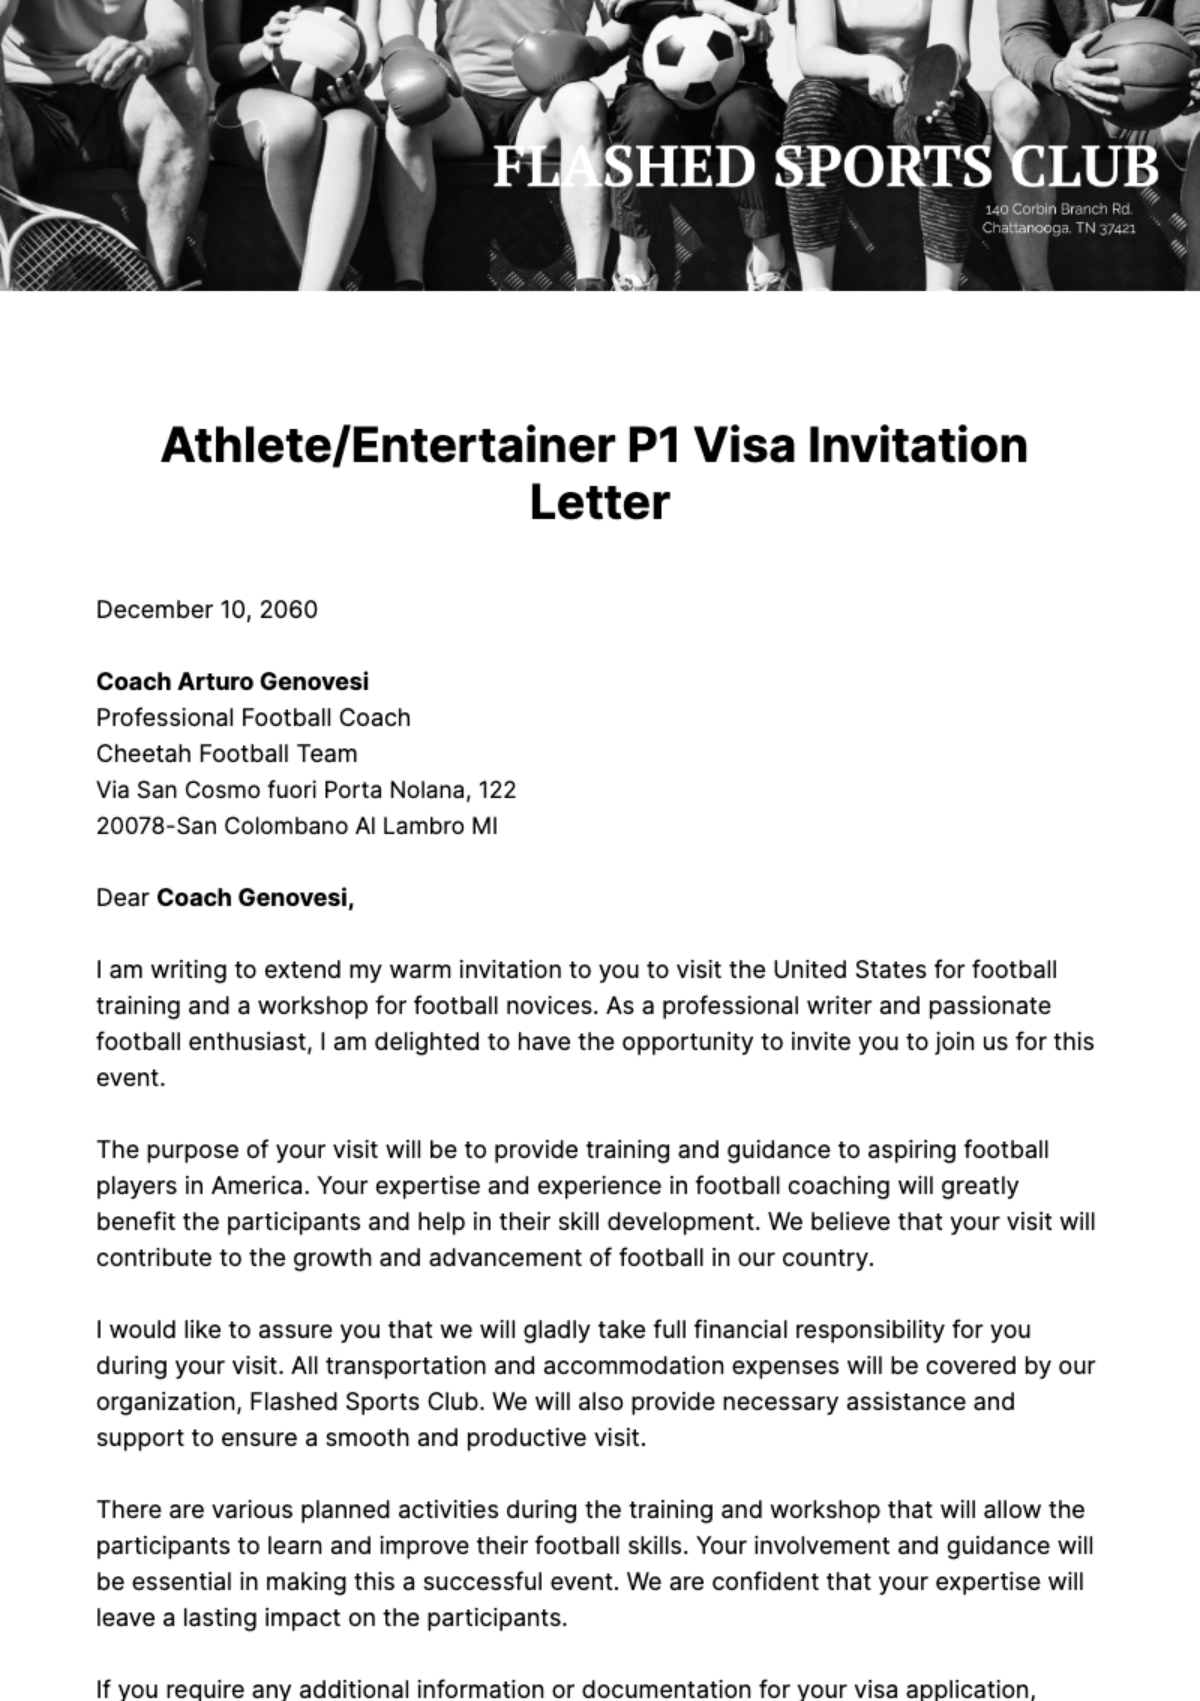 Free Athlete/Entertainer P1 Visa Invitation Letter Template